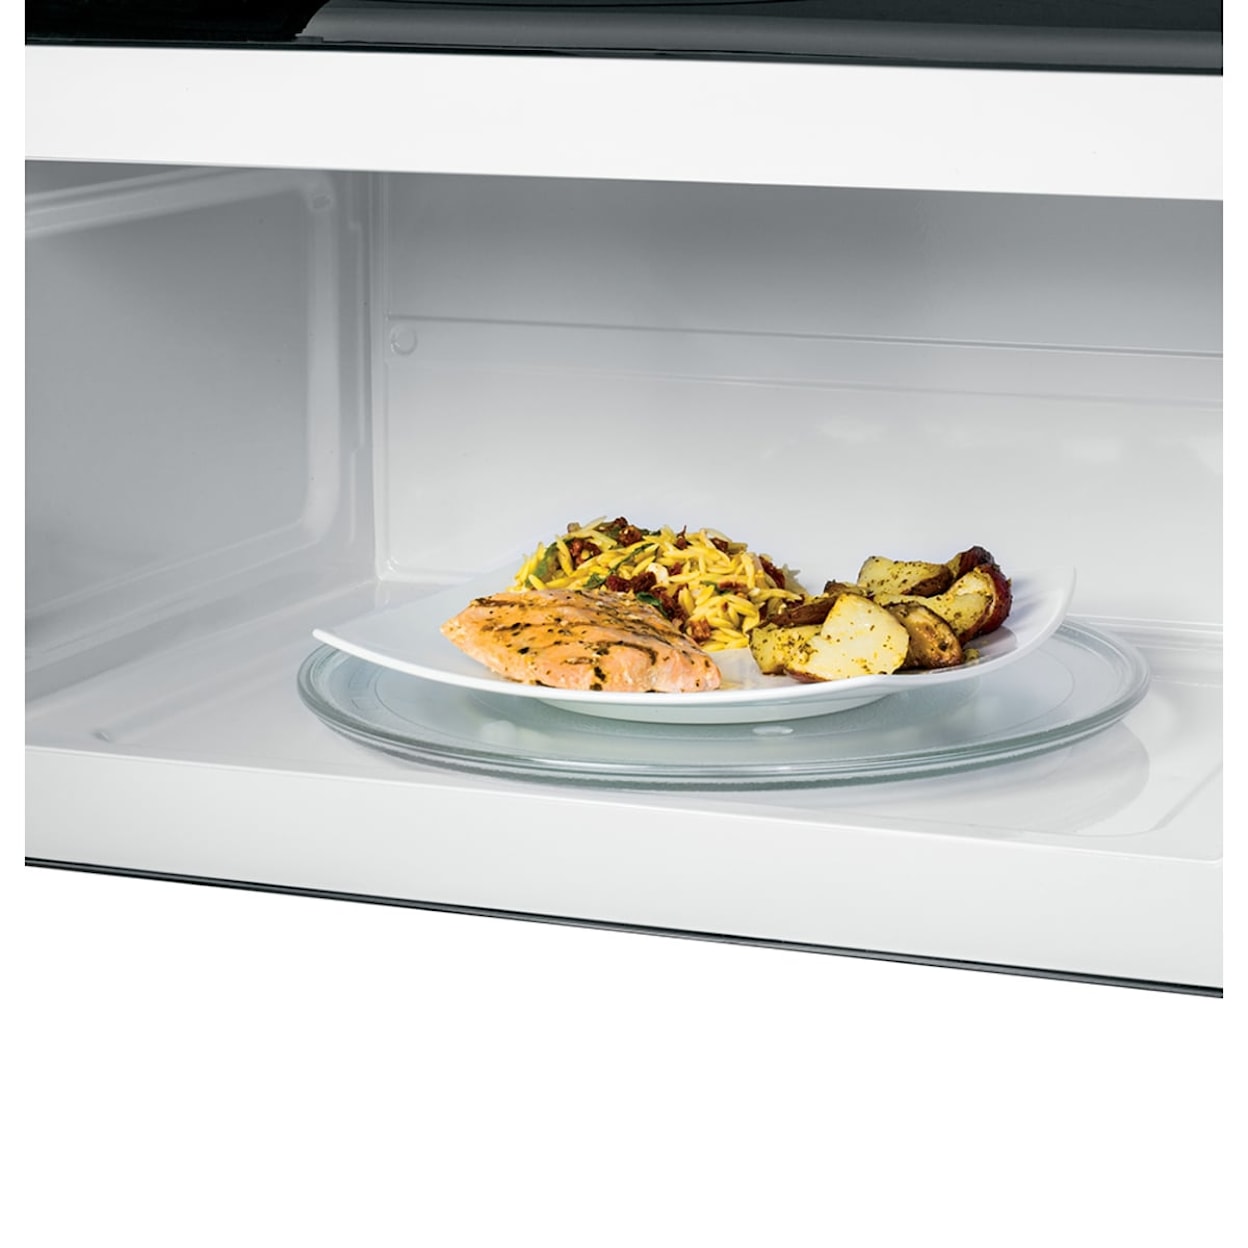 GE Appliances Microwaves Over-the-Range Microwave